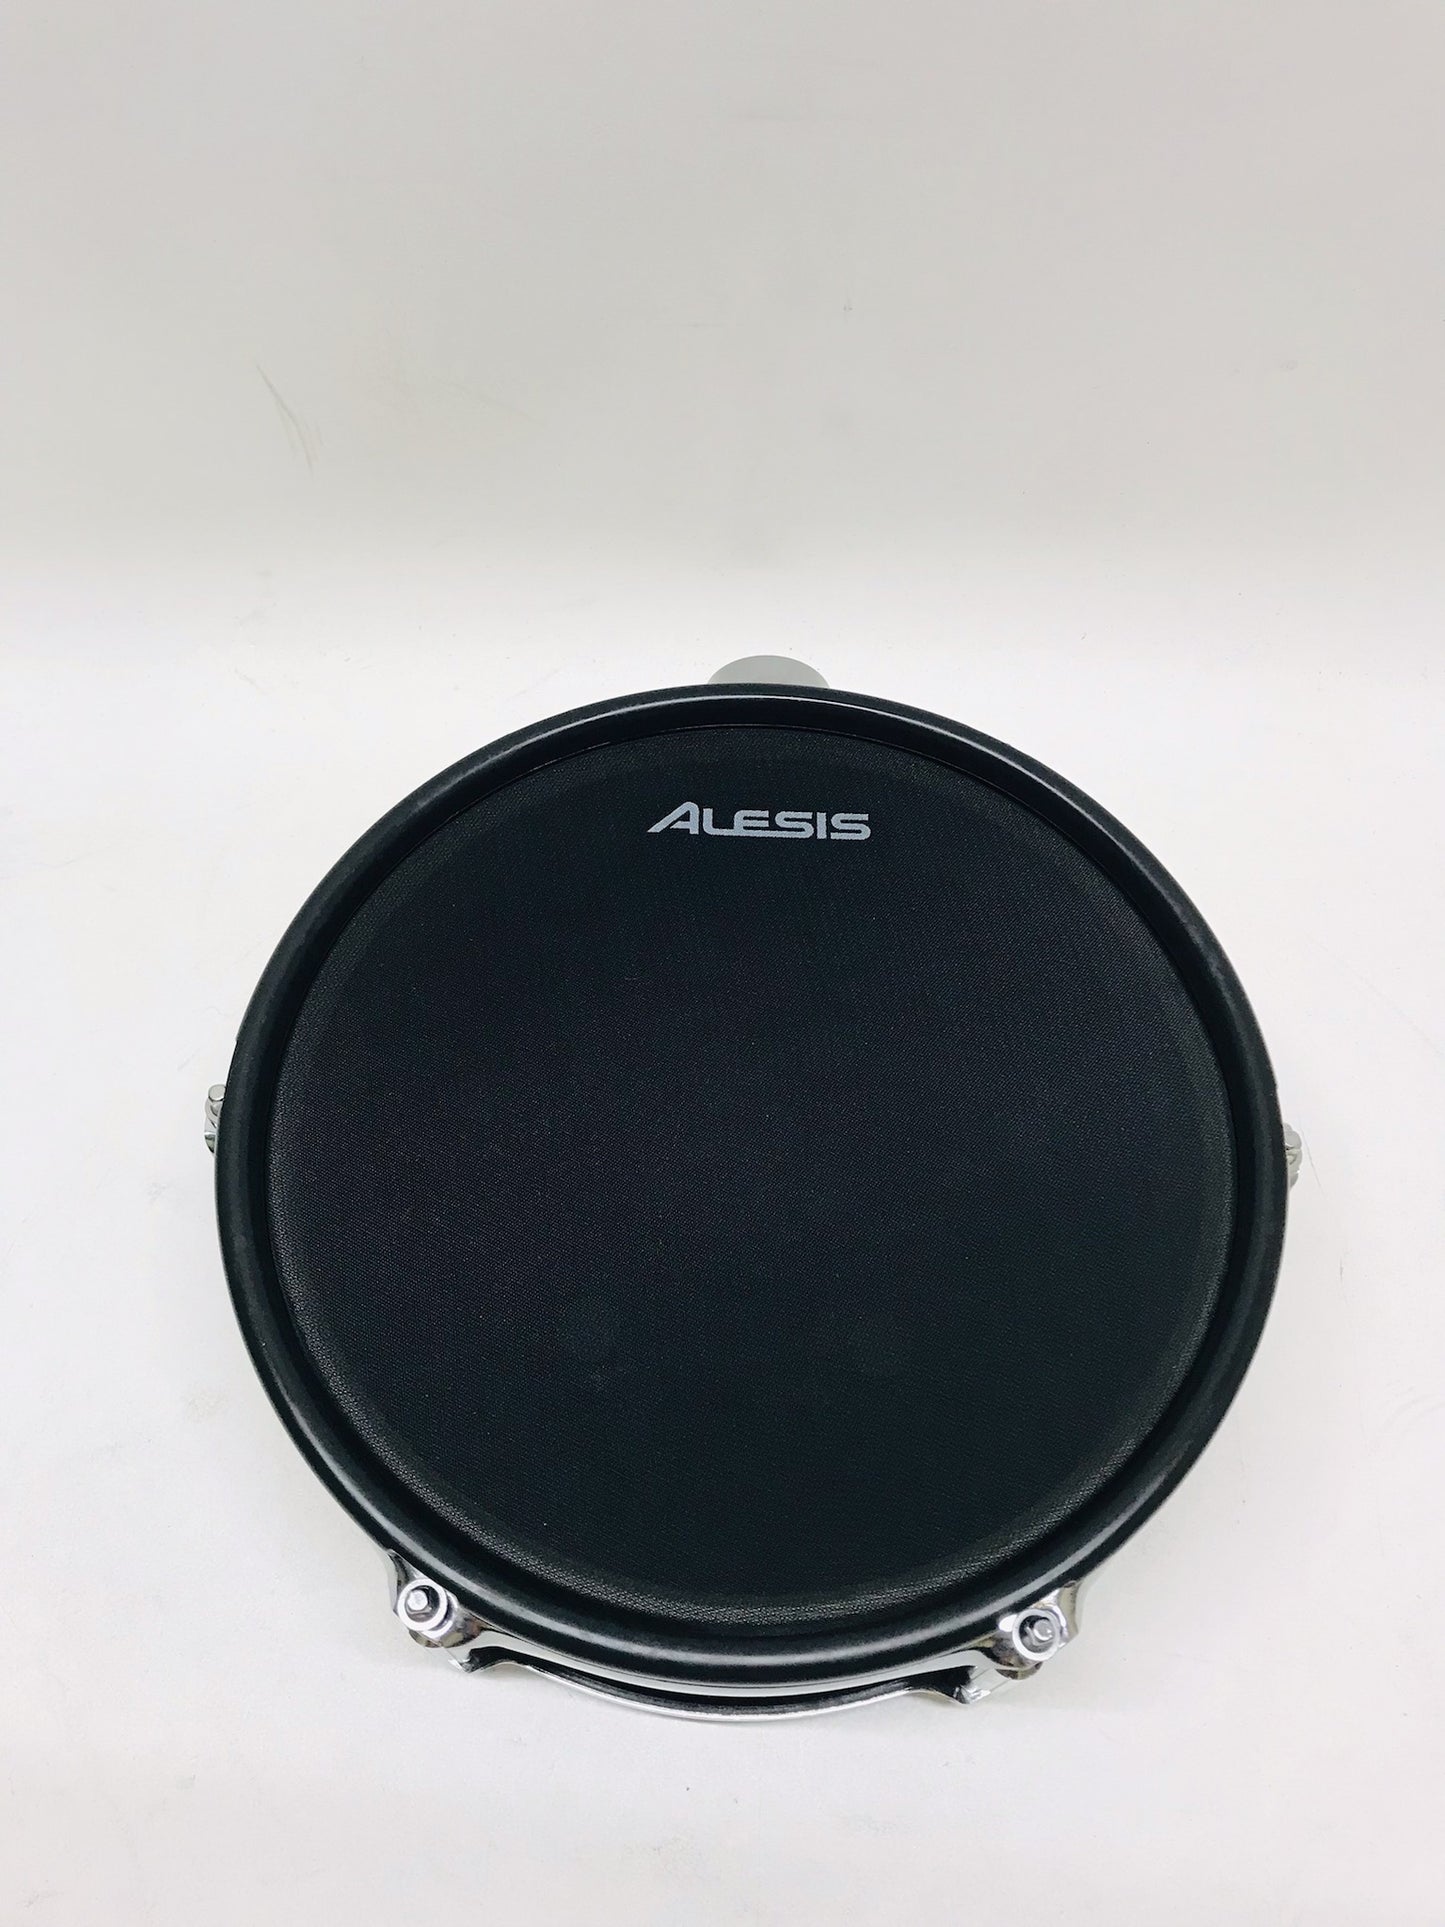 Alesis Strike Pro 10” Mesh Drum Pad Clamp Cable